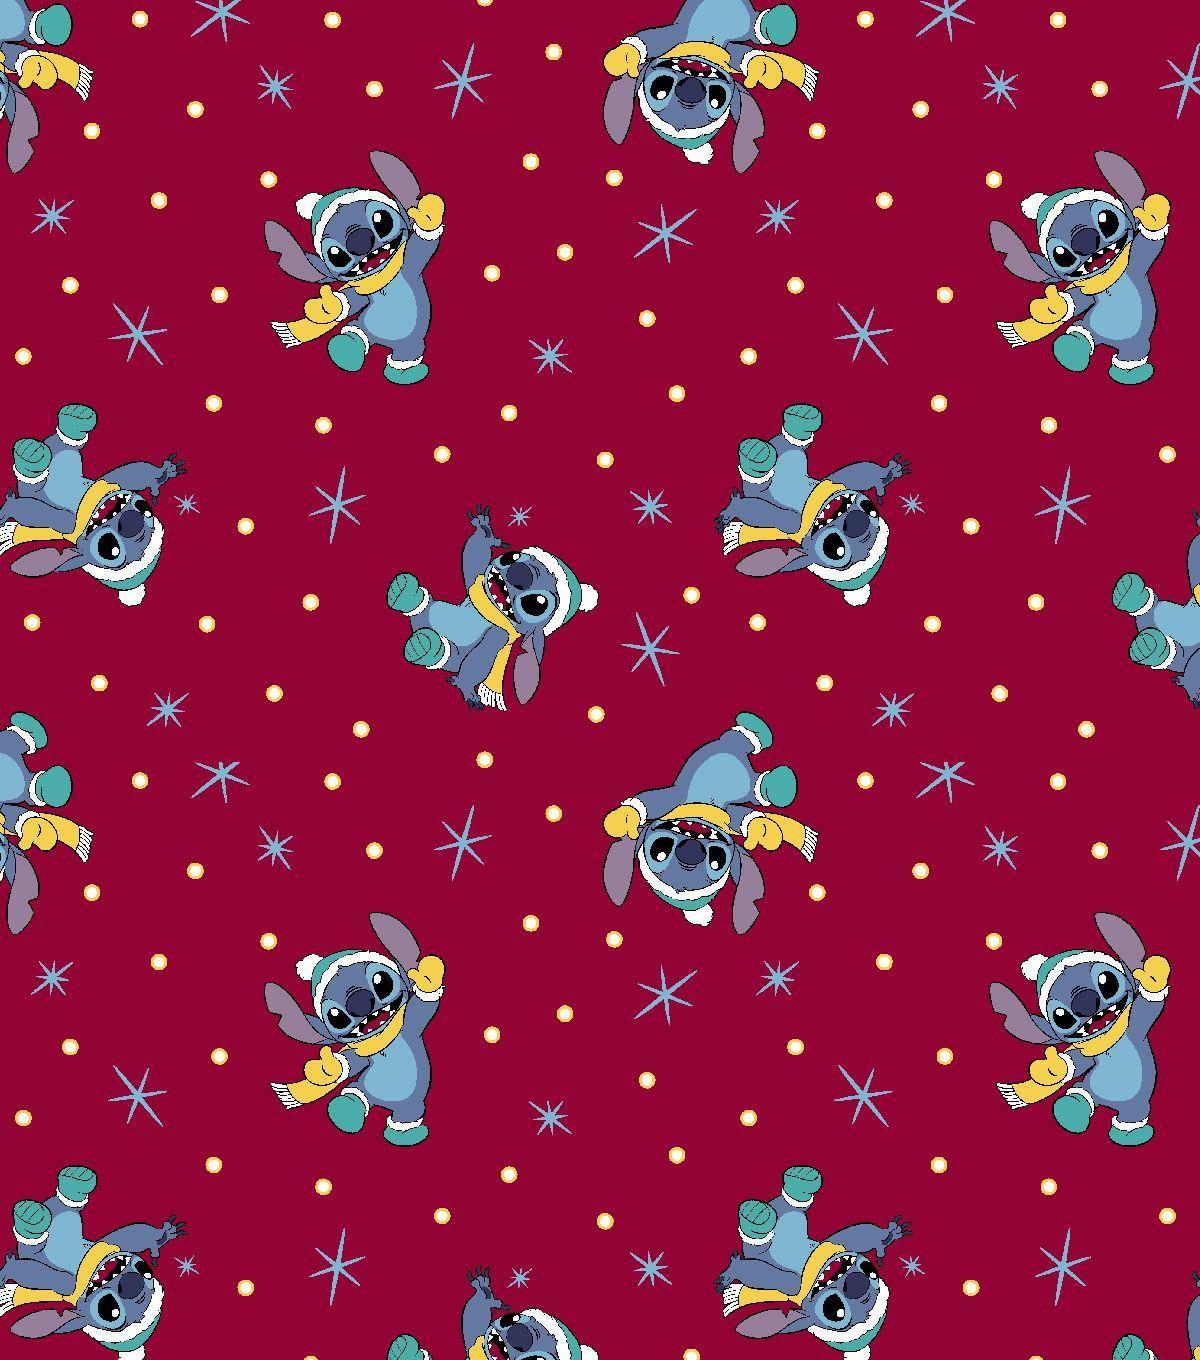 26 Cute stitch Christmas wallpaper ideas  christmas wallpaper cute stitch  cute christmas wallpaper